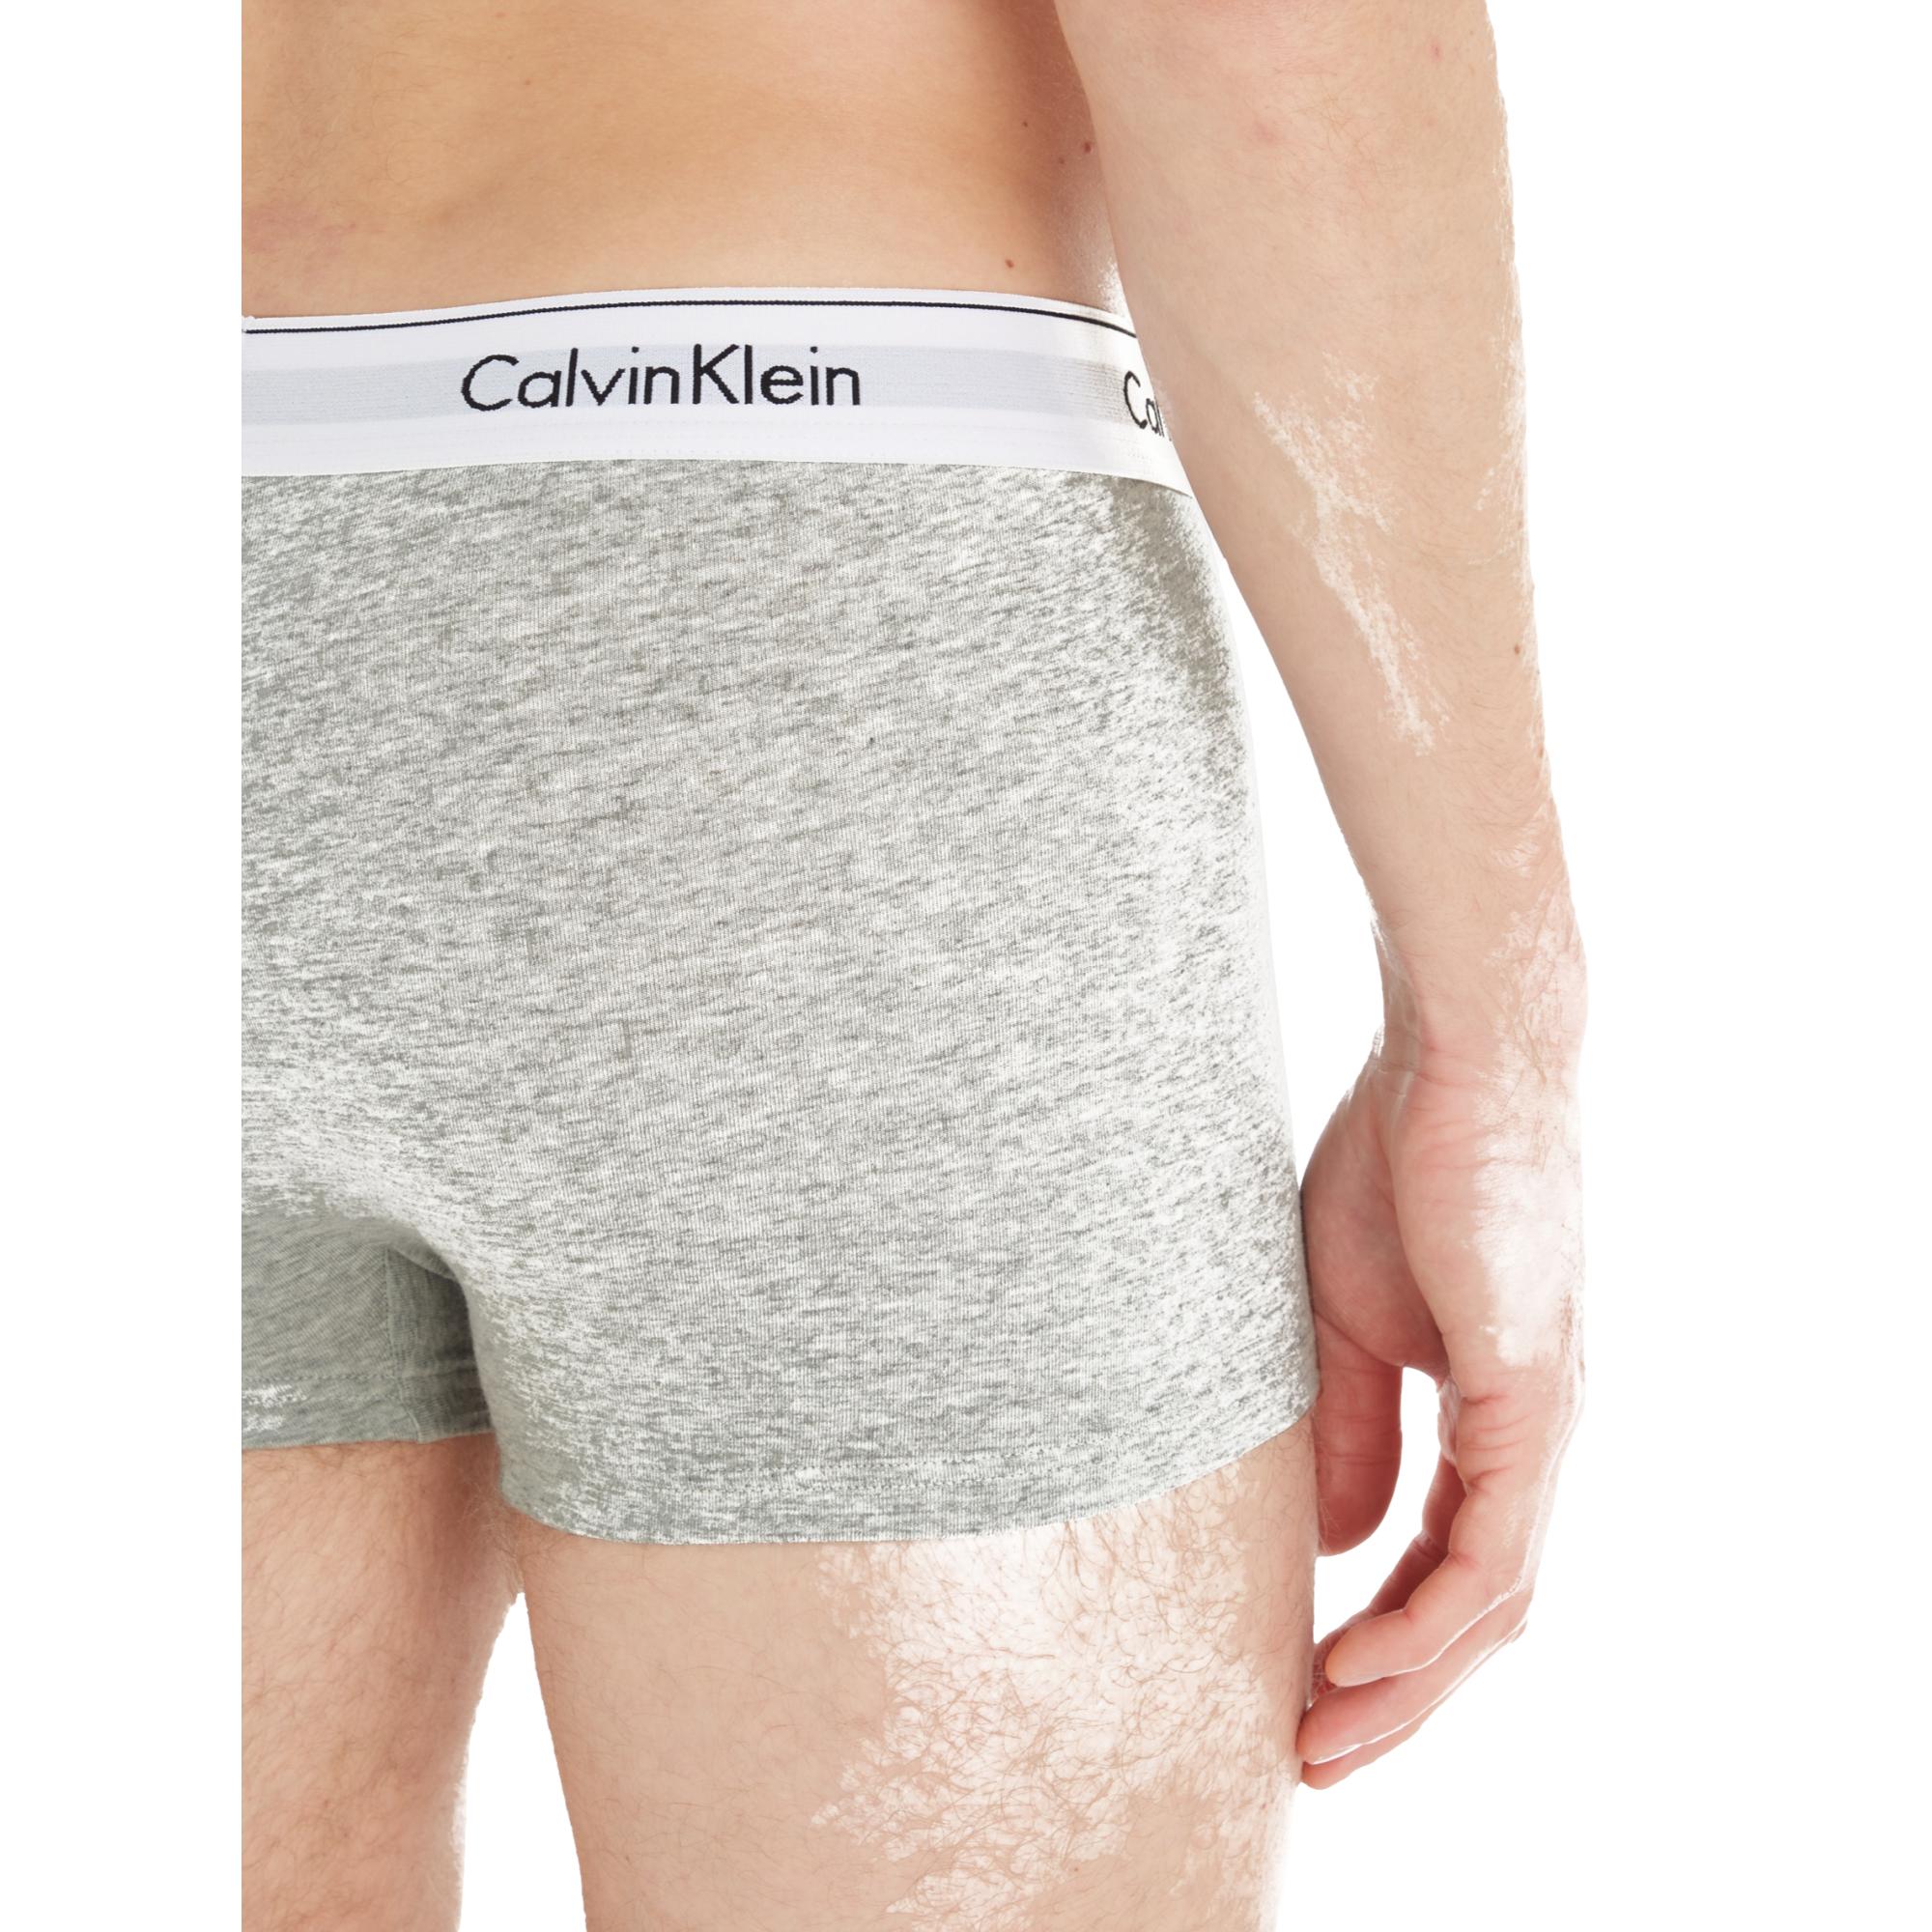 Calvin Klein Modern Cotton Stretch Trunks 3 Pack - Black / White